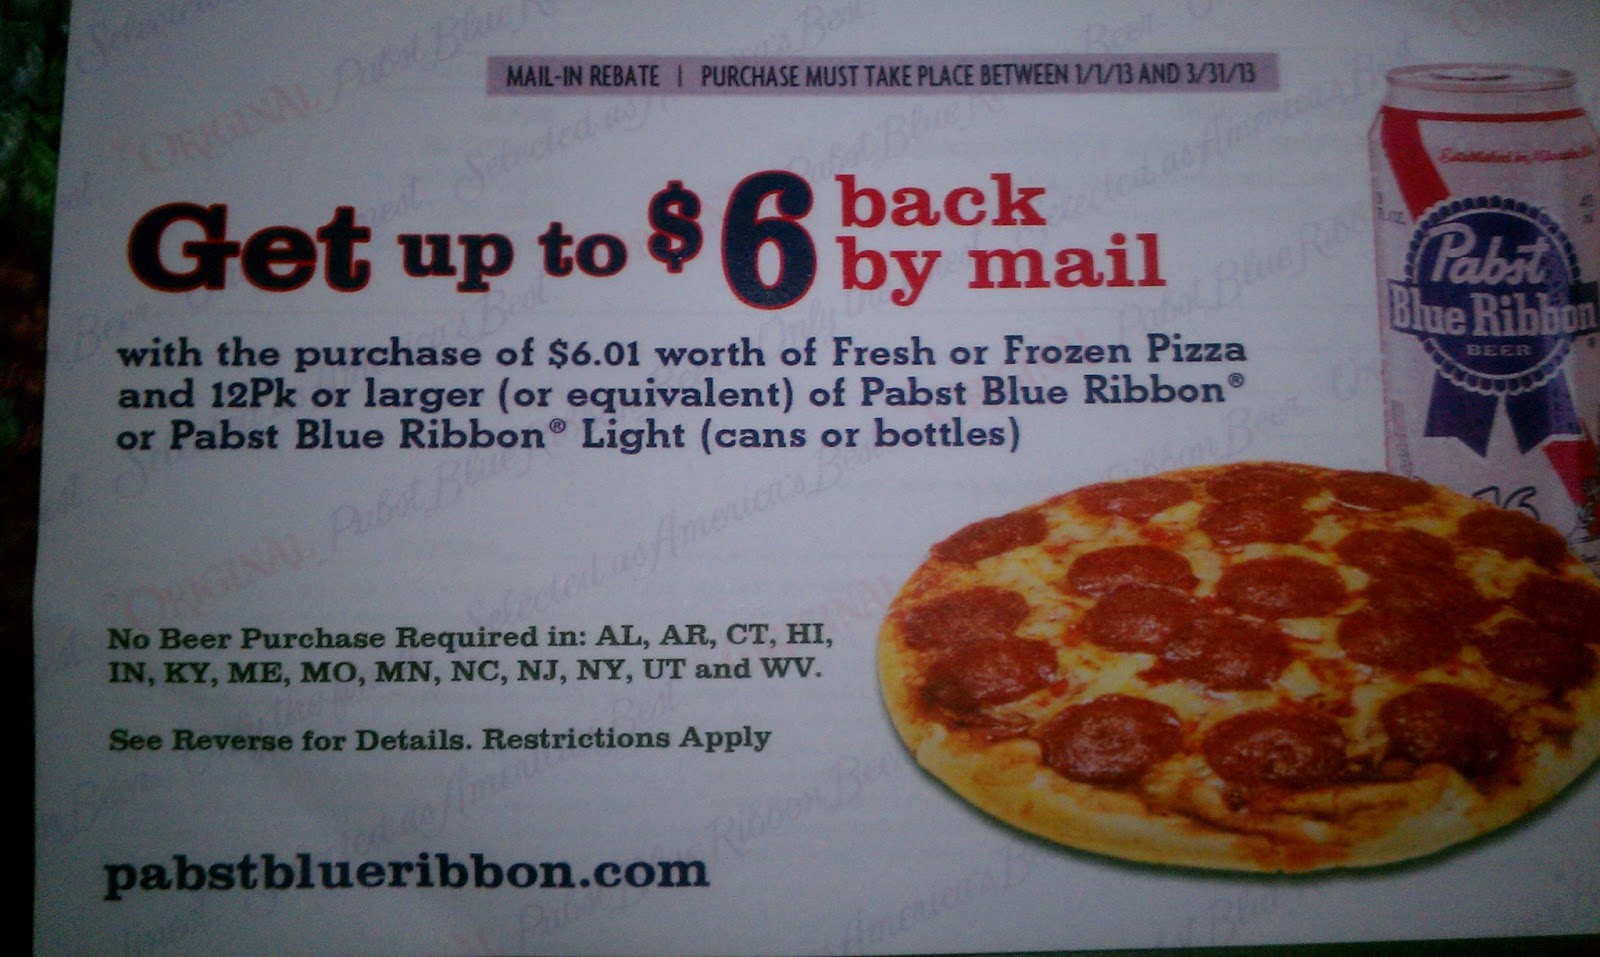 coupon-stl-pabst-beer-rebate-6-on-pizza